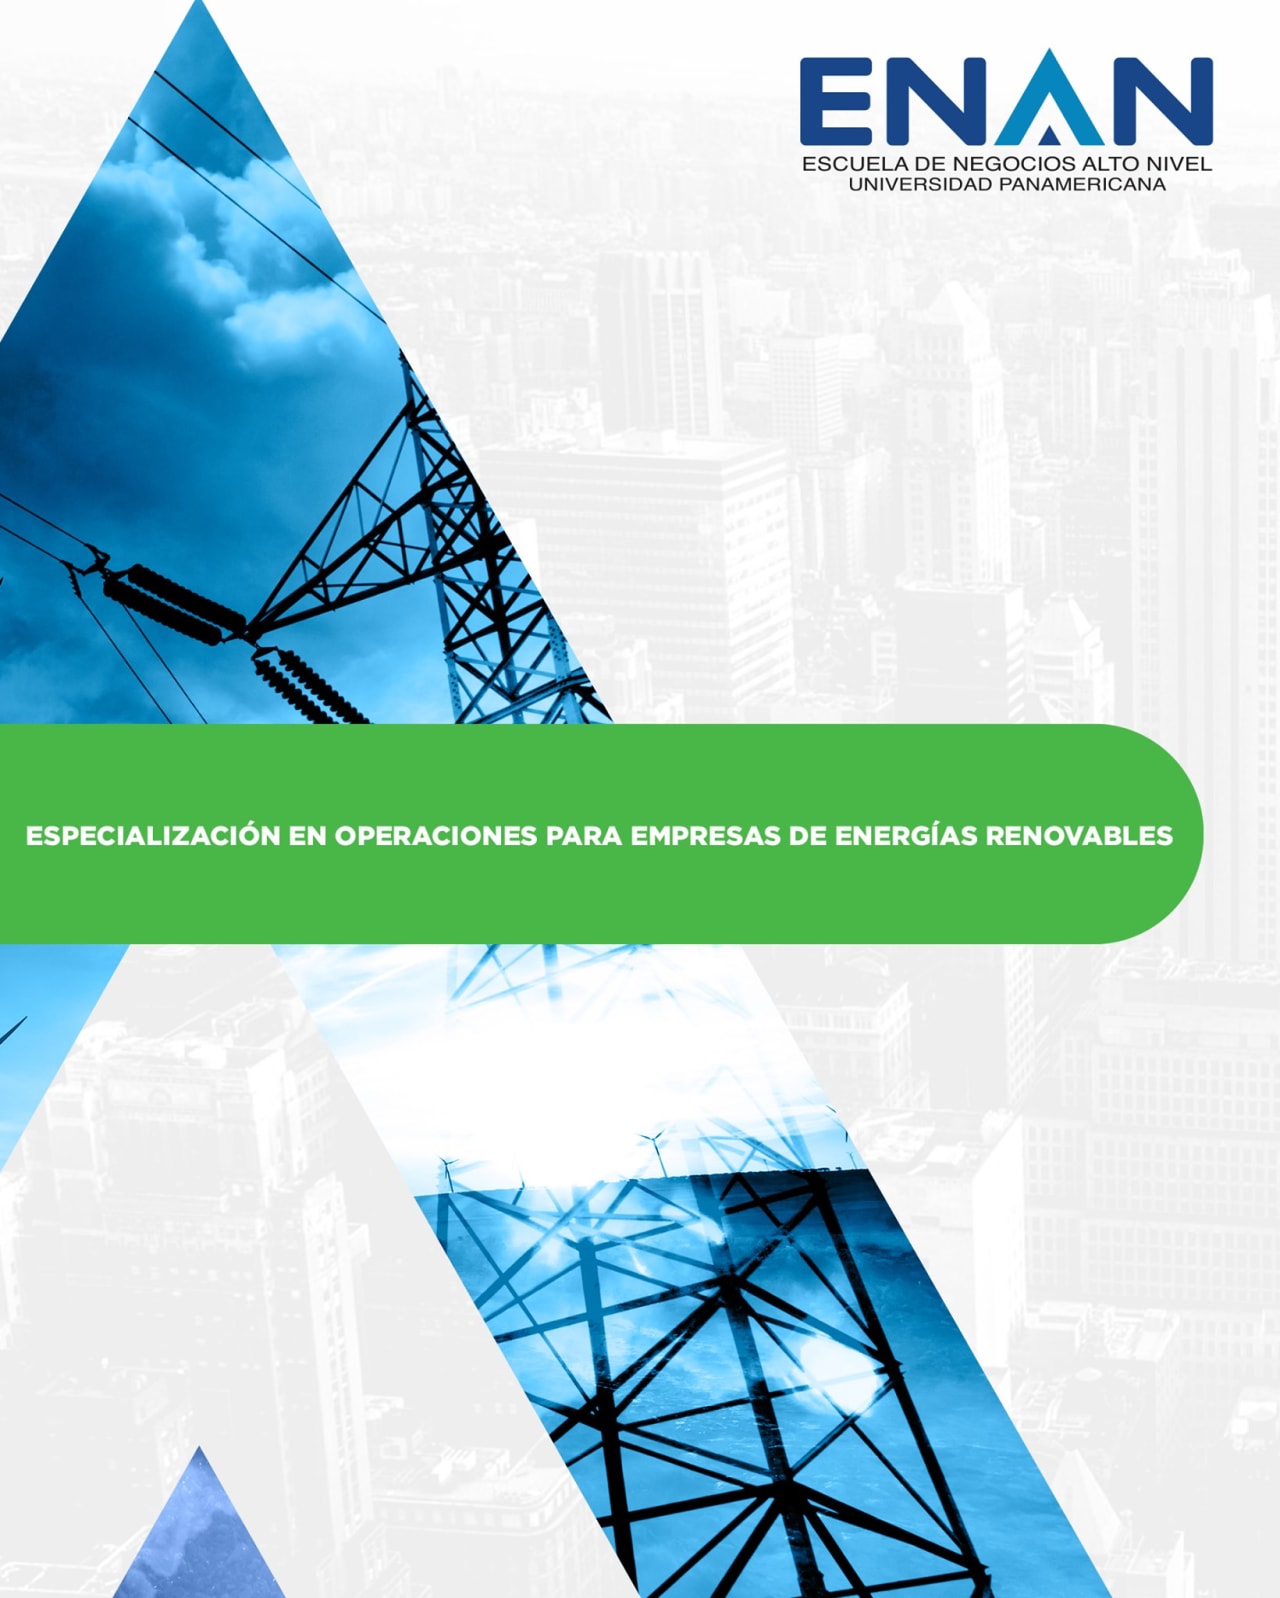 Escuela de Negocios Alto Nivel - Universidad Panamericana de Guatemala Specializace na operace pro společnosti z oblasti obnovitelných zdrojů energie